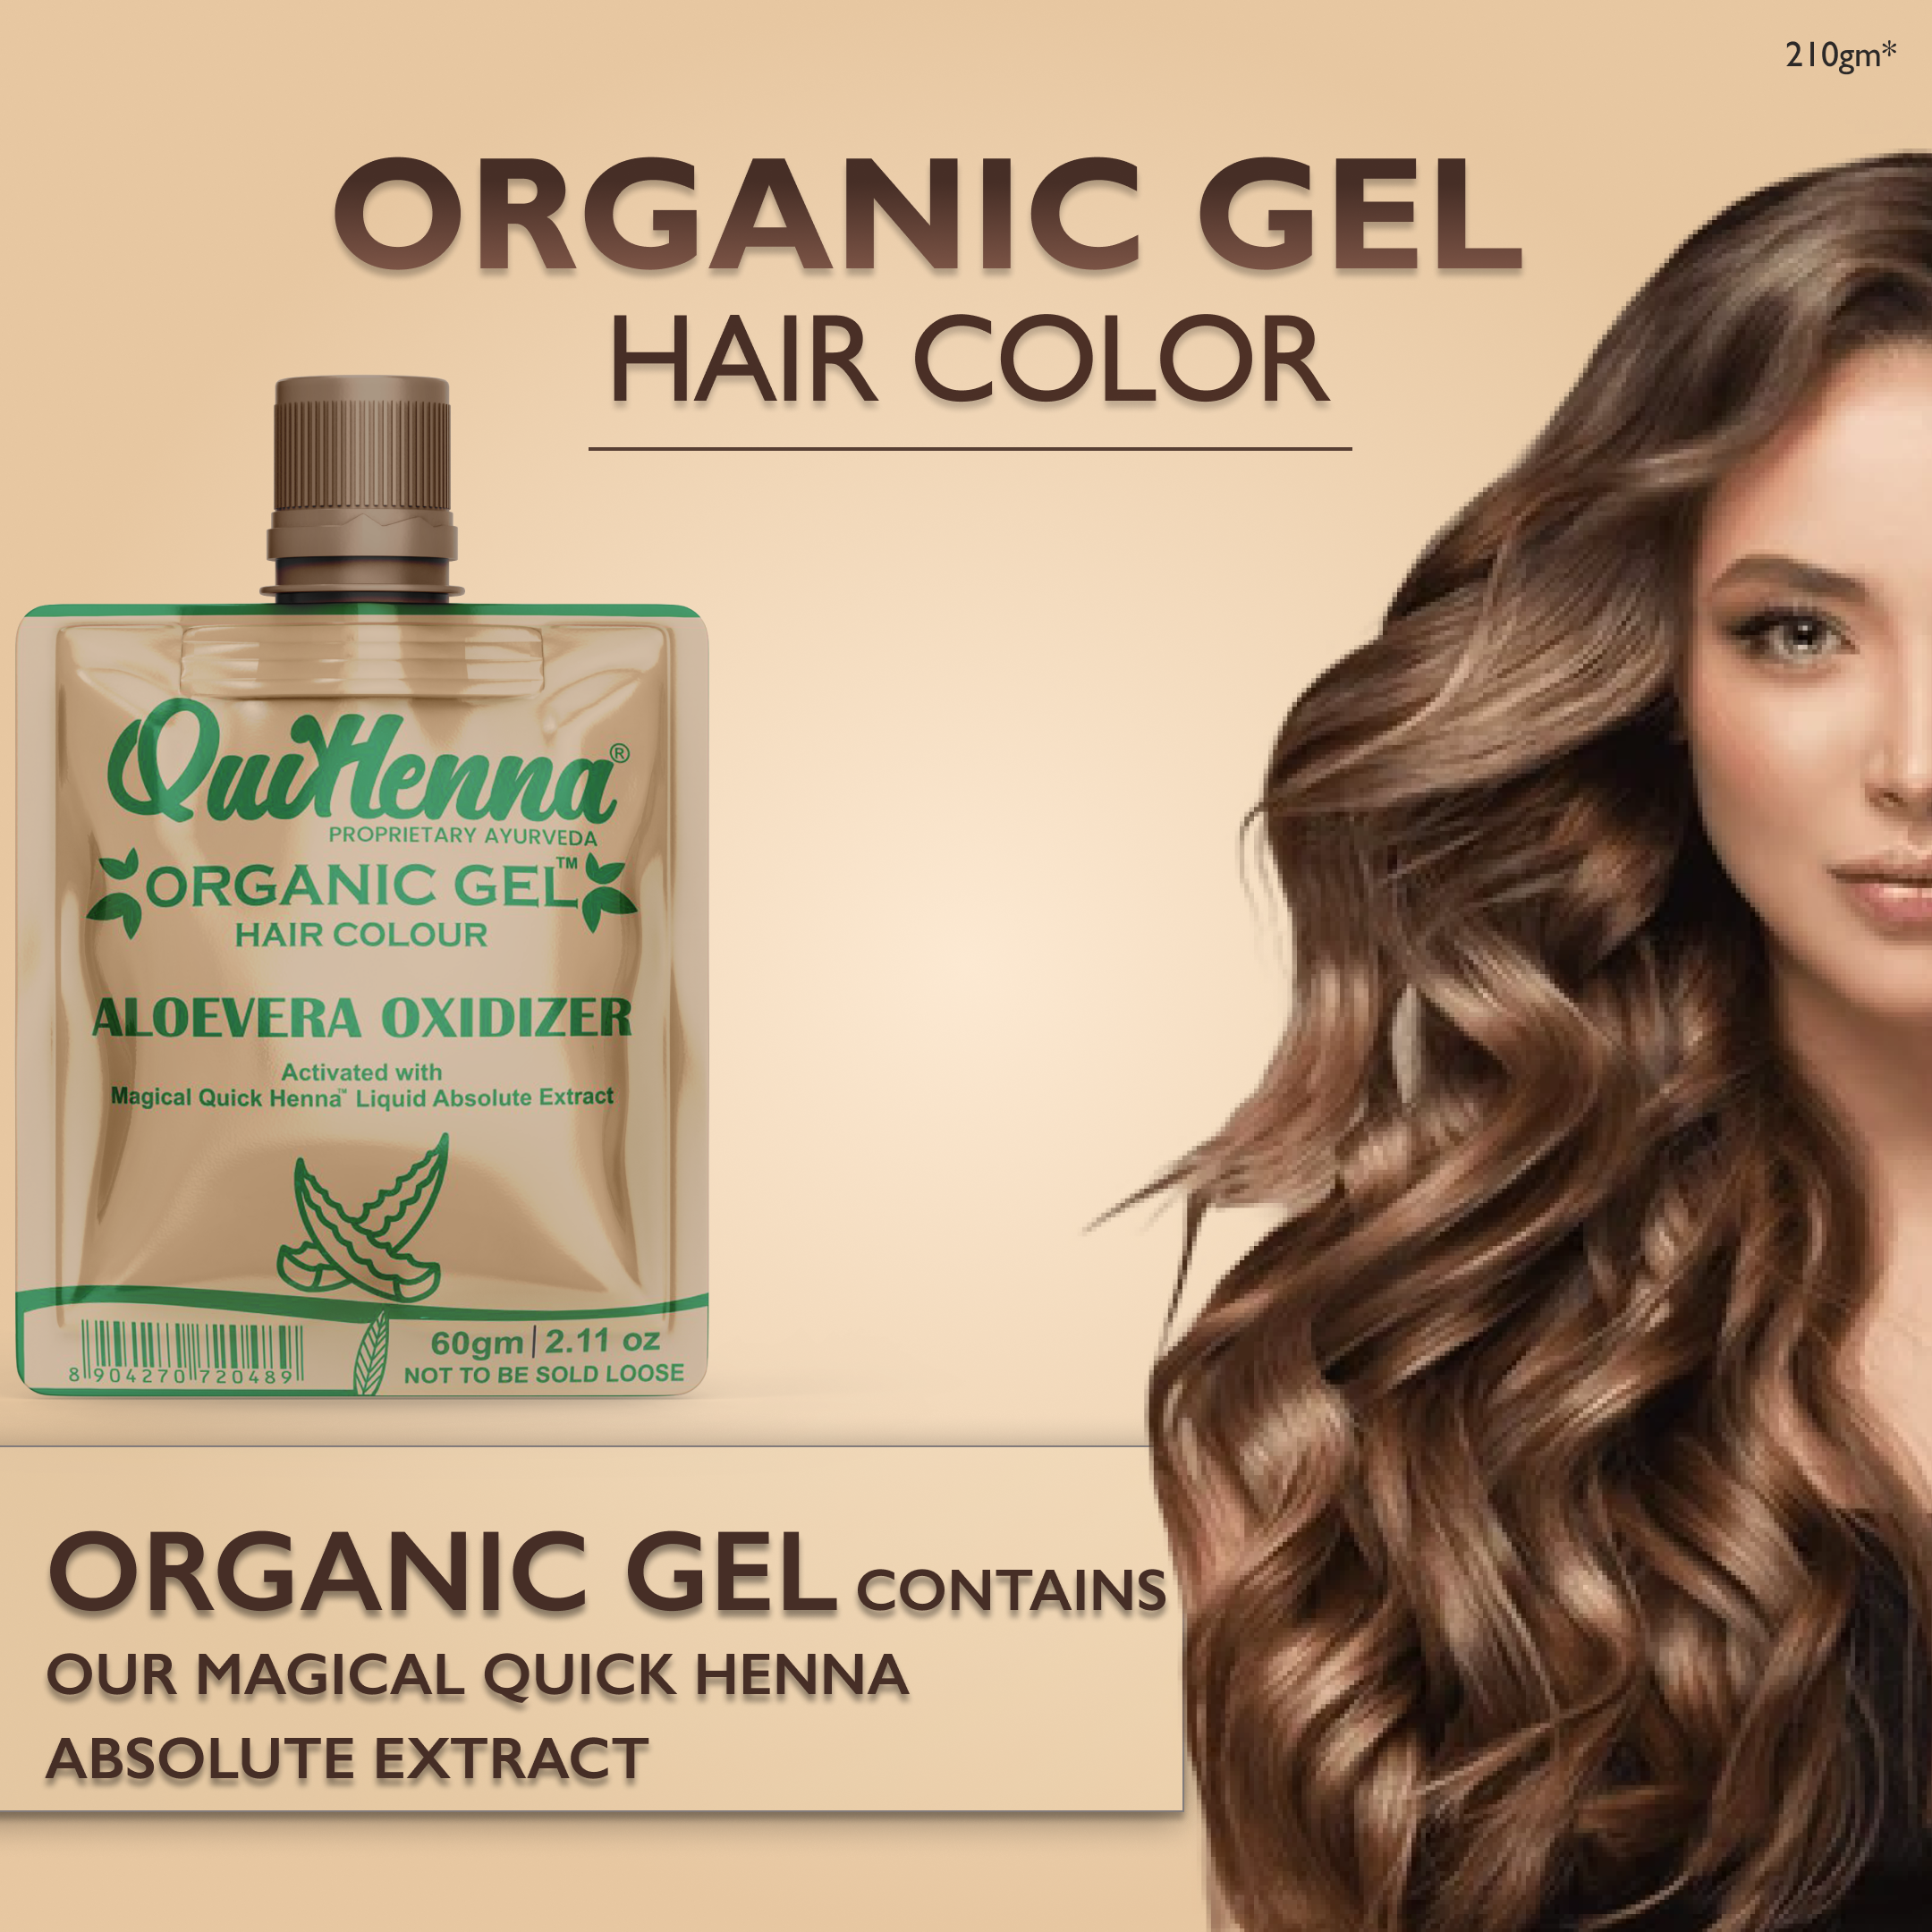 QuikHenna PPD & Ammonia Free Organic Gel Permanent Hair Colour 3N Dark Brown for Men & Women 210GM